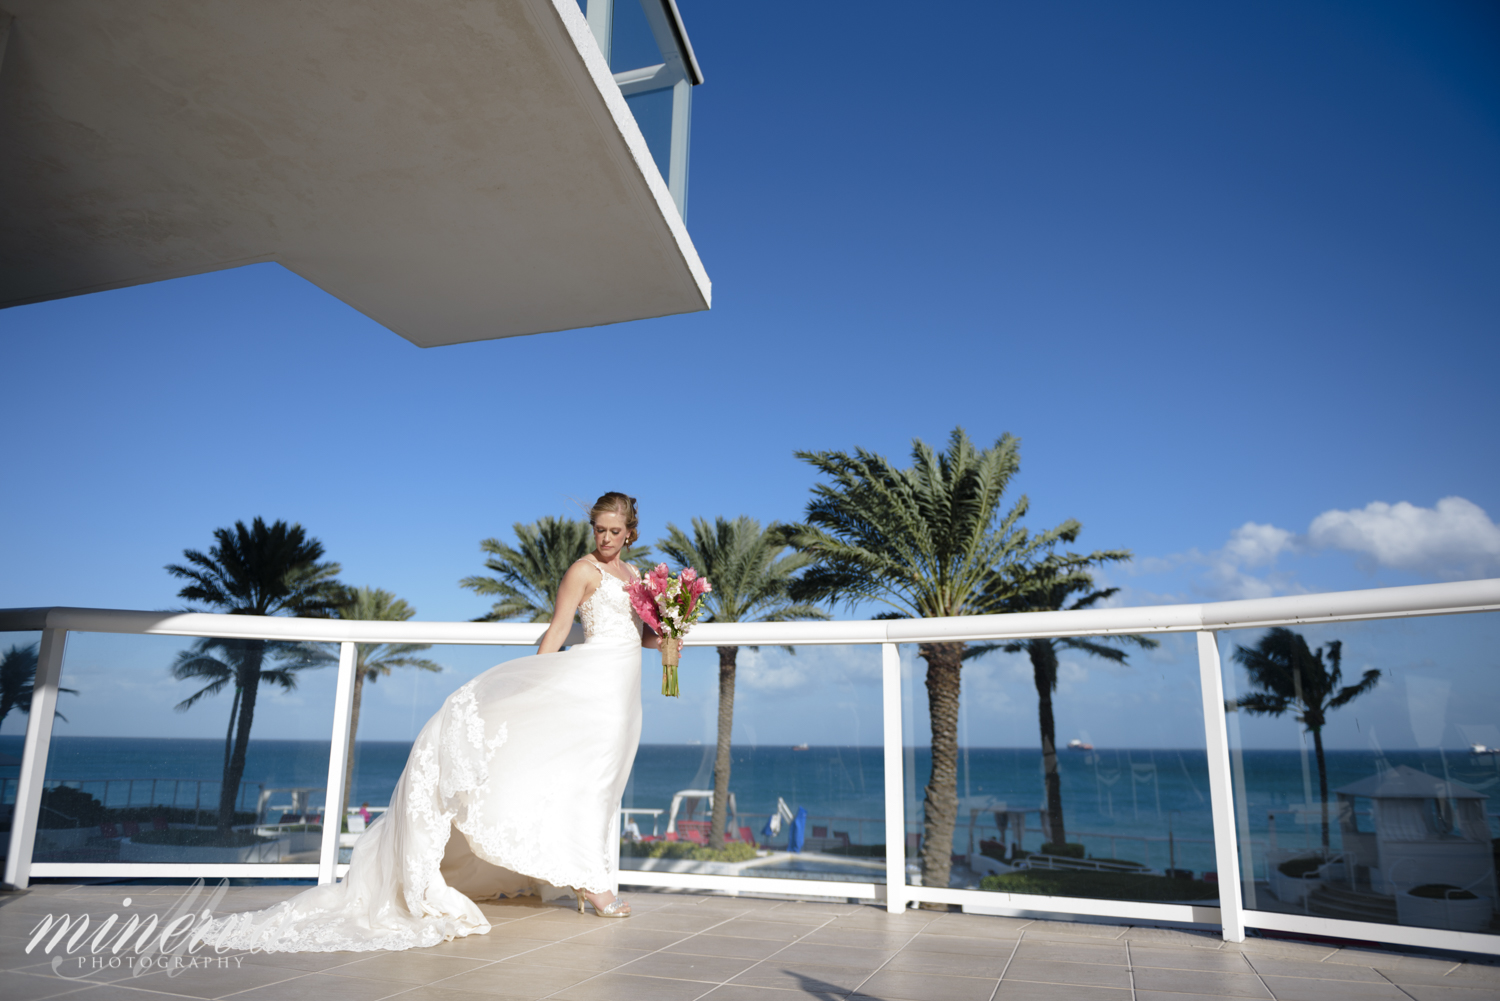 034_romantic-sunset-beach-wedding-photography_hilton-fort-lauderdale-beach-resort_south-florida_miami_broward_palm-beach_keys_orlando_photographer